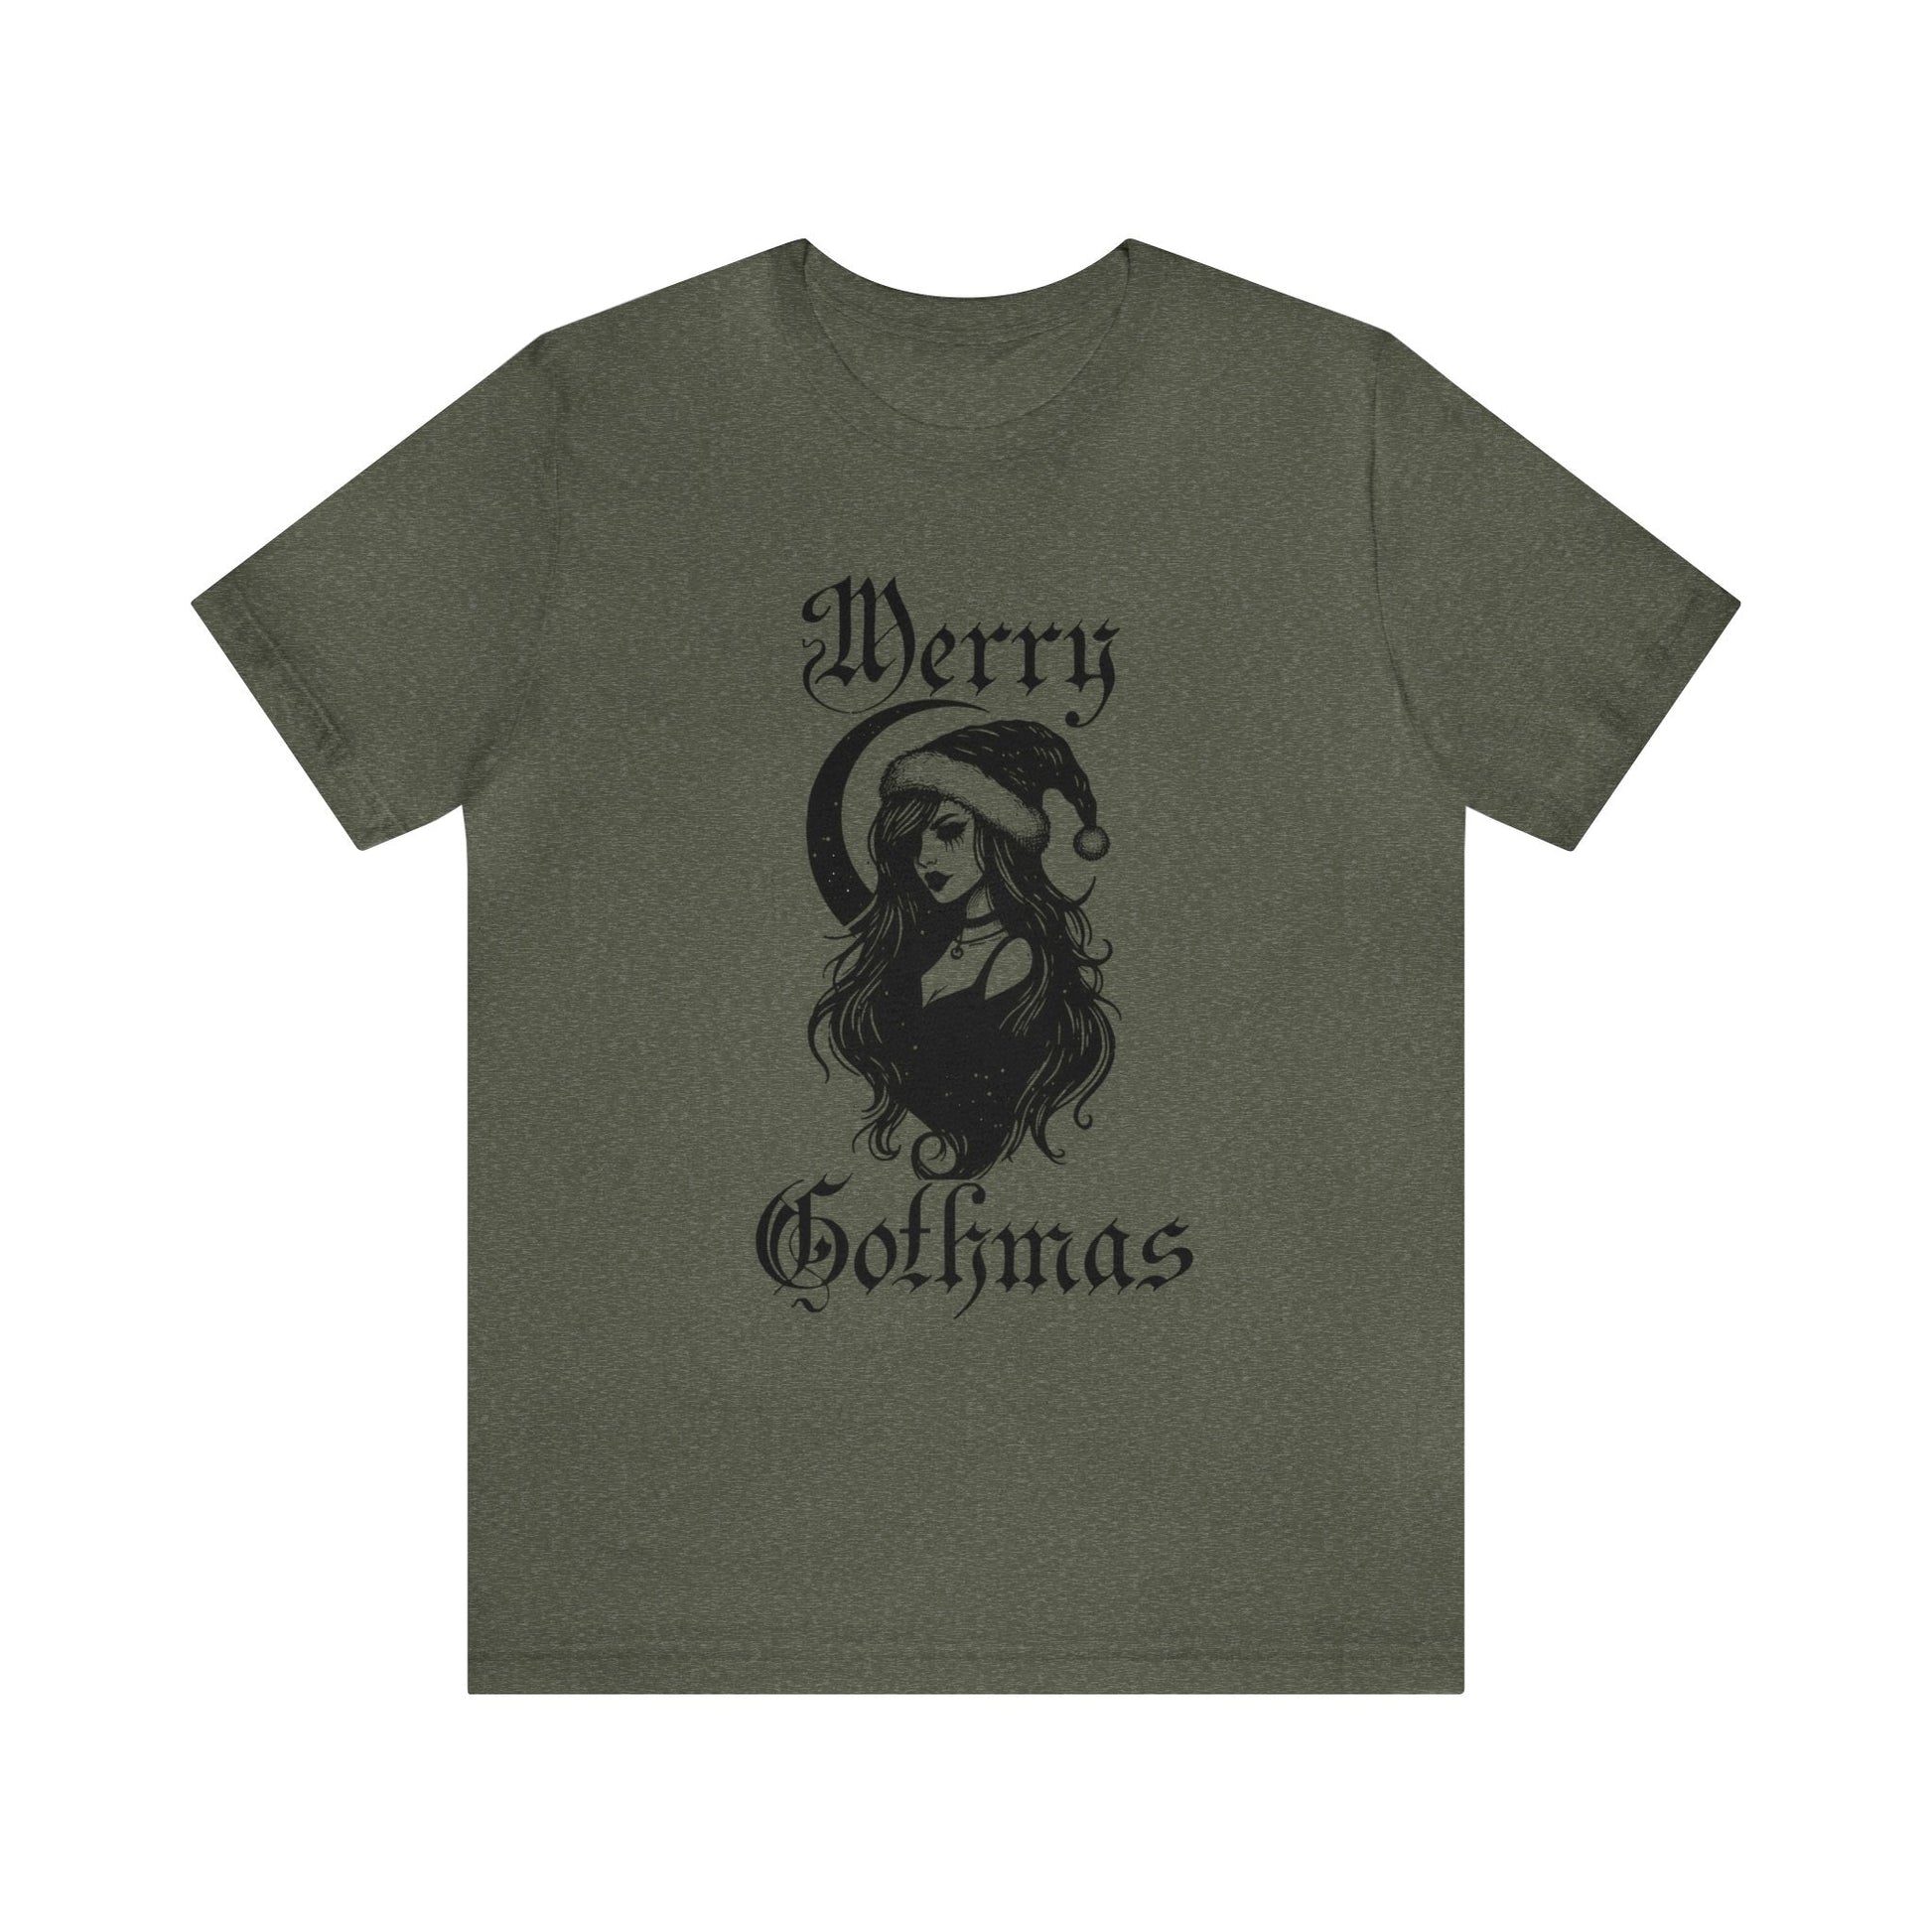 Merry Gothmas Short Sleeve Tee ShirtT - ShirtVTZdesignsHeather Military GreenXSchristmasclothingCotton